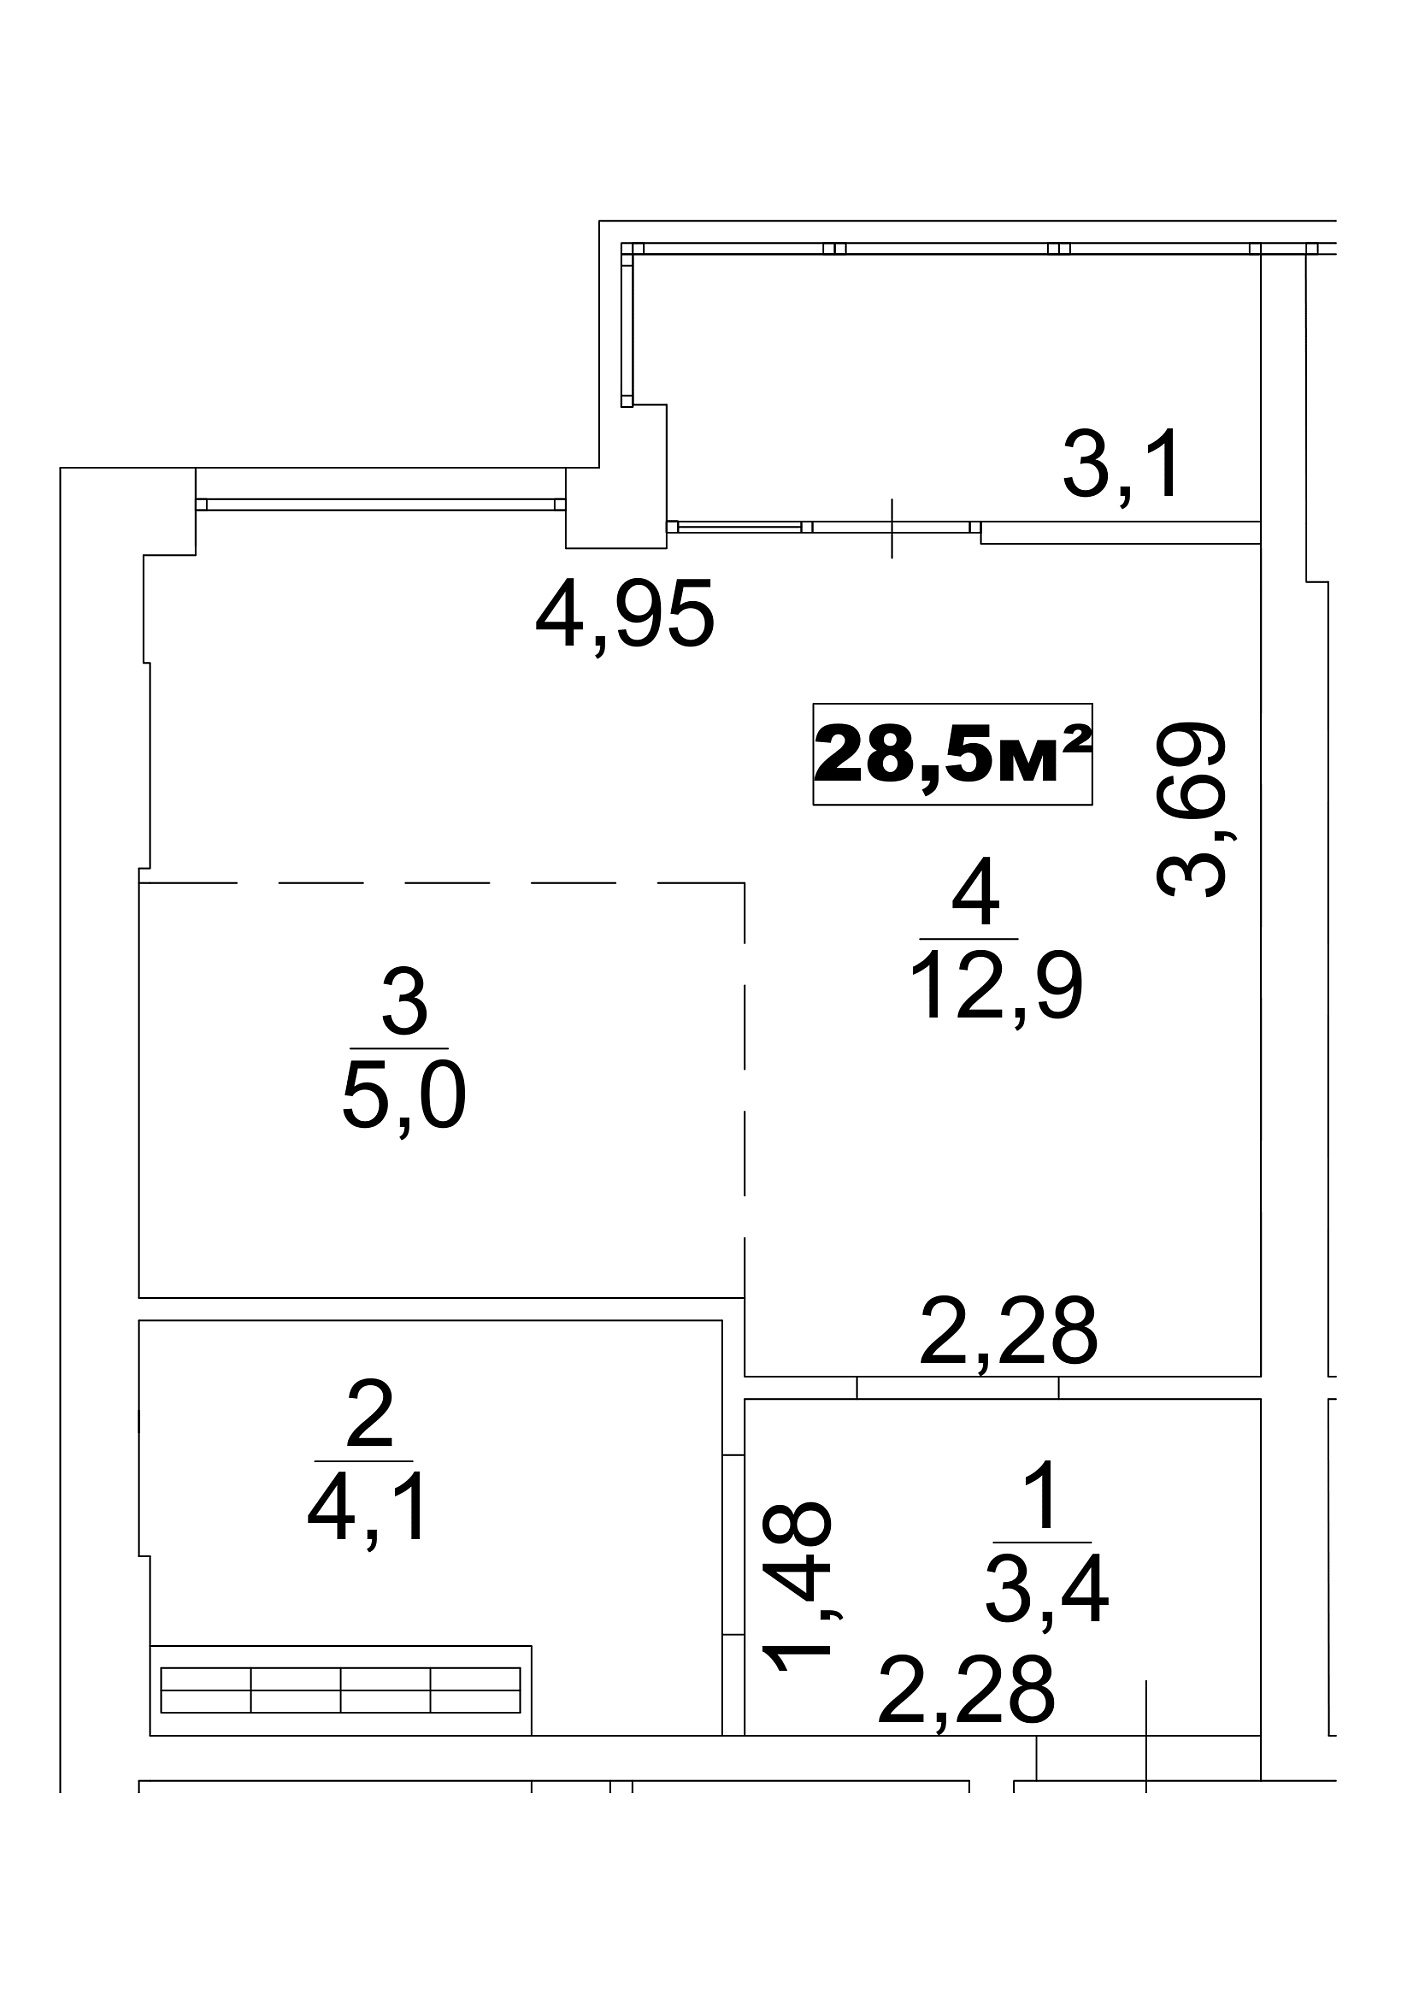 Планировка Smart-квартира площей 28.5м2, AB-13-09/0072б.